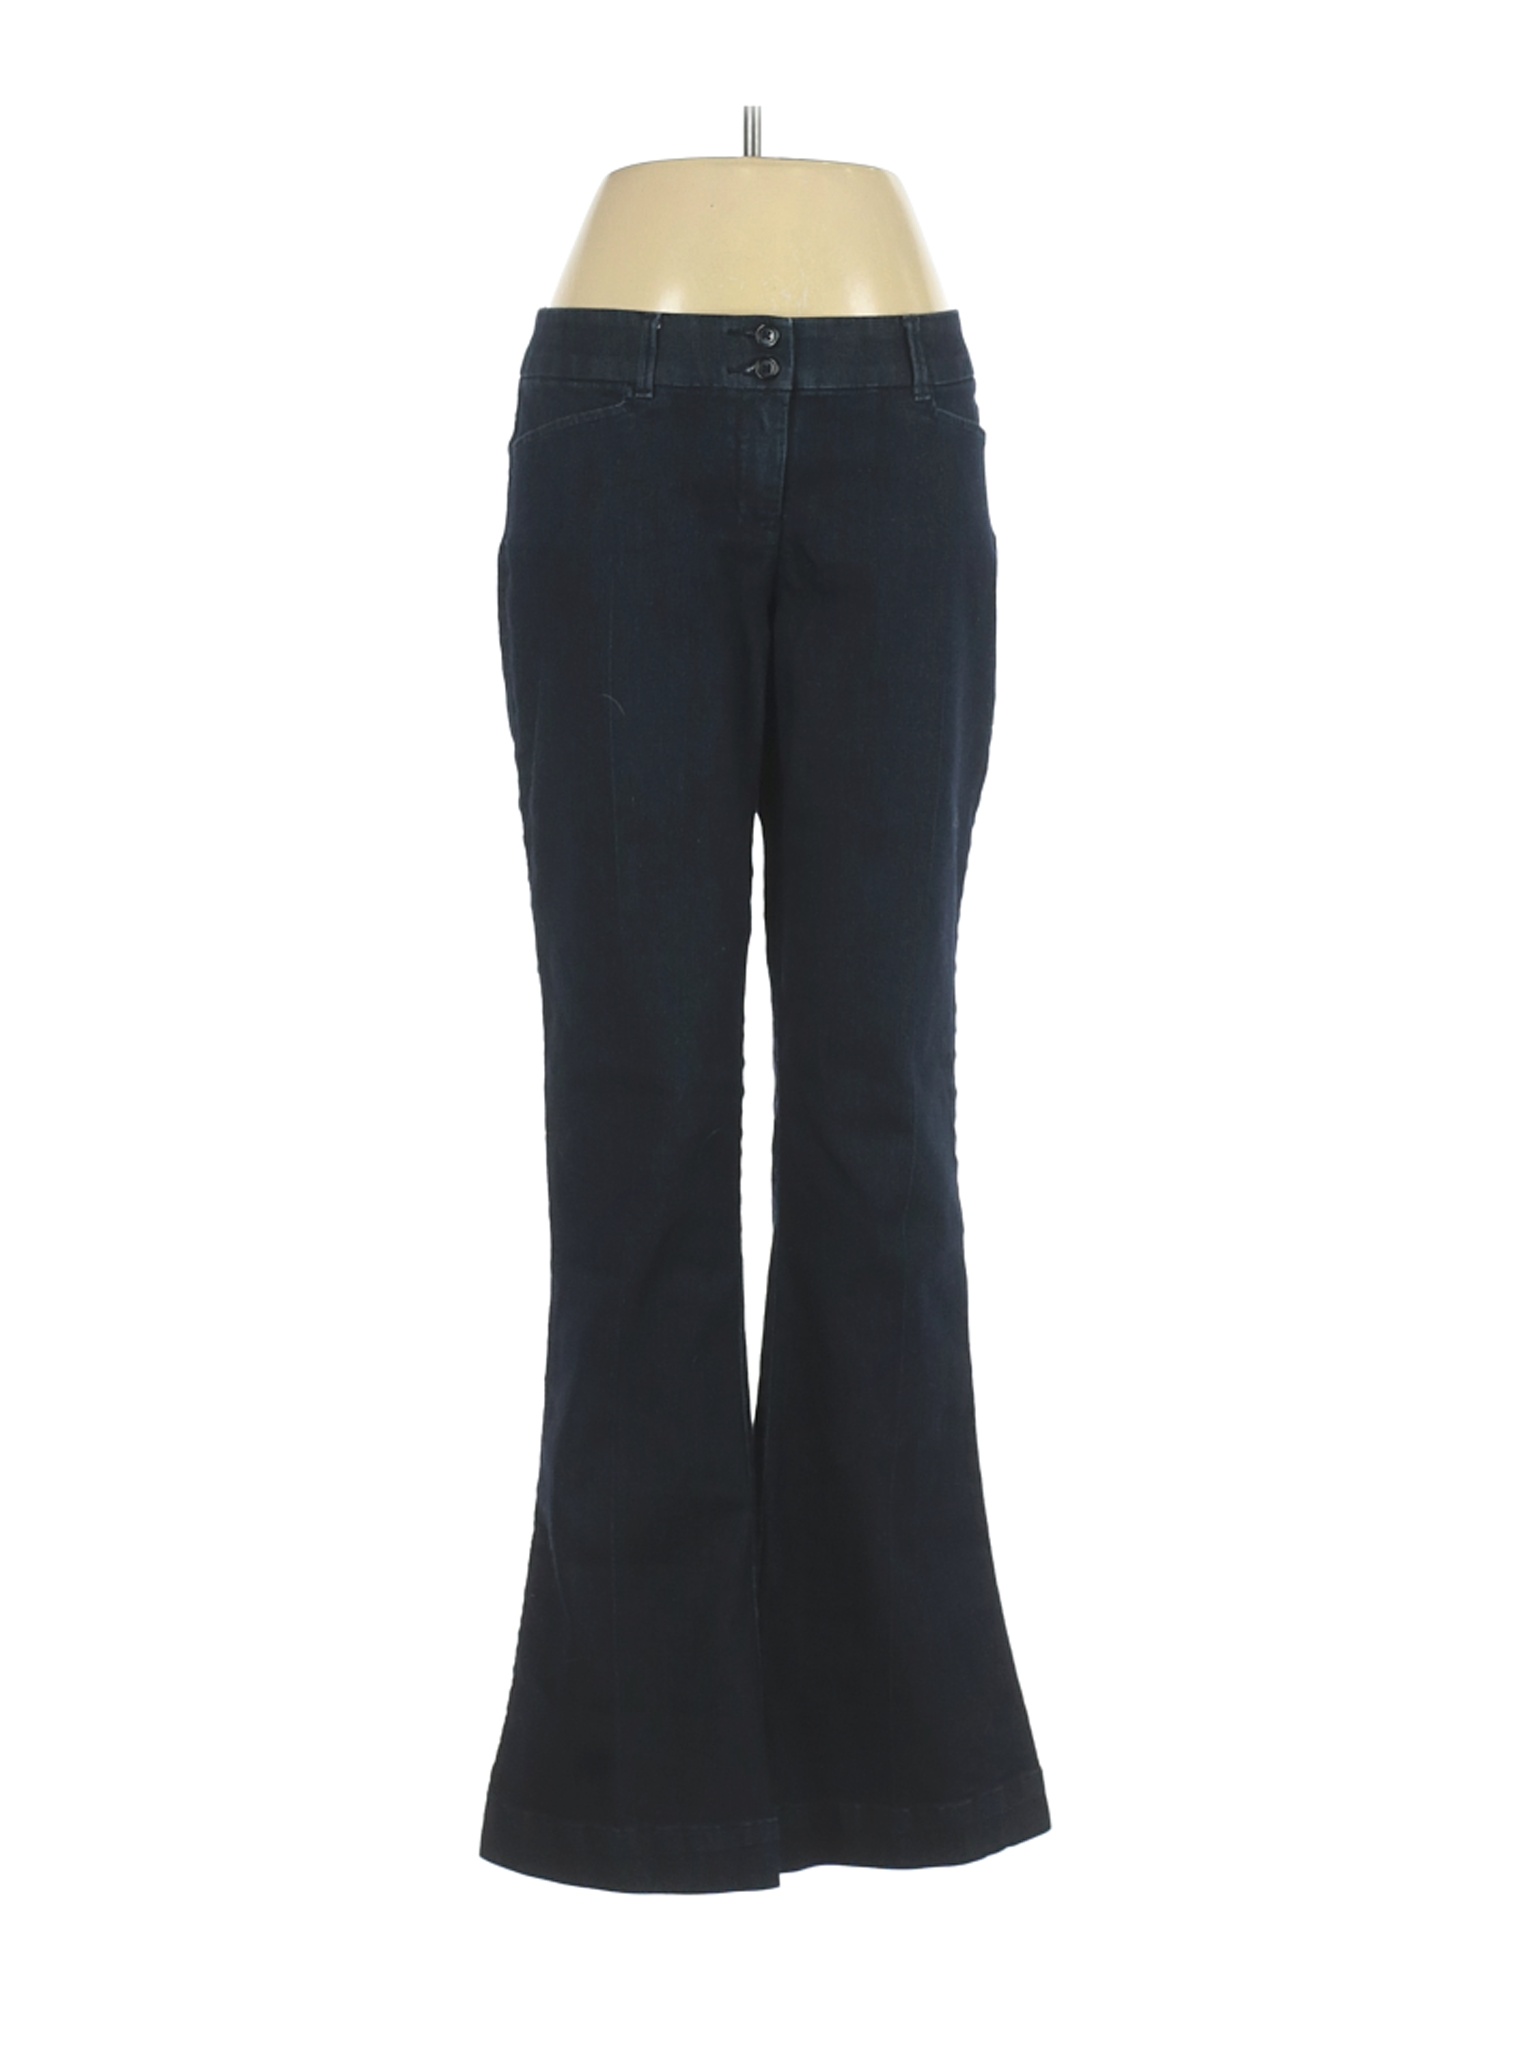 The Limited Women Black Jeans 6 | eBay